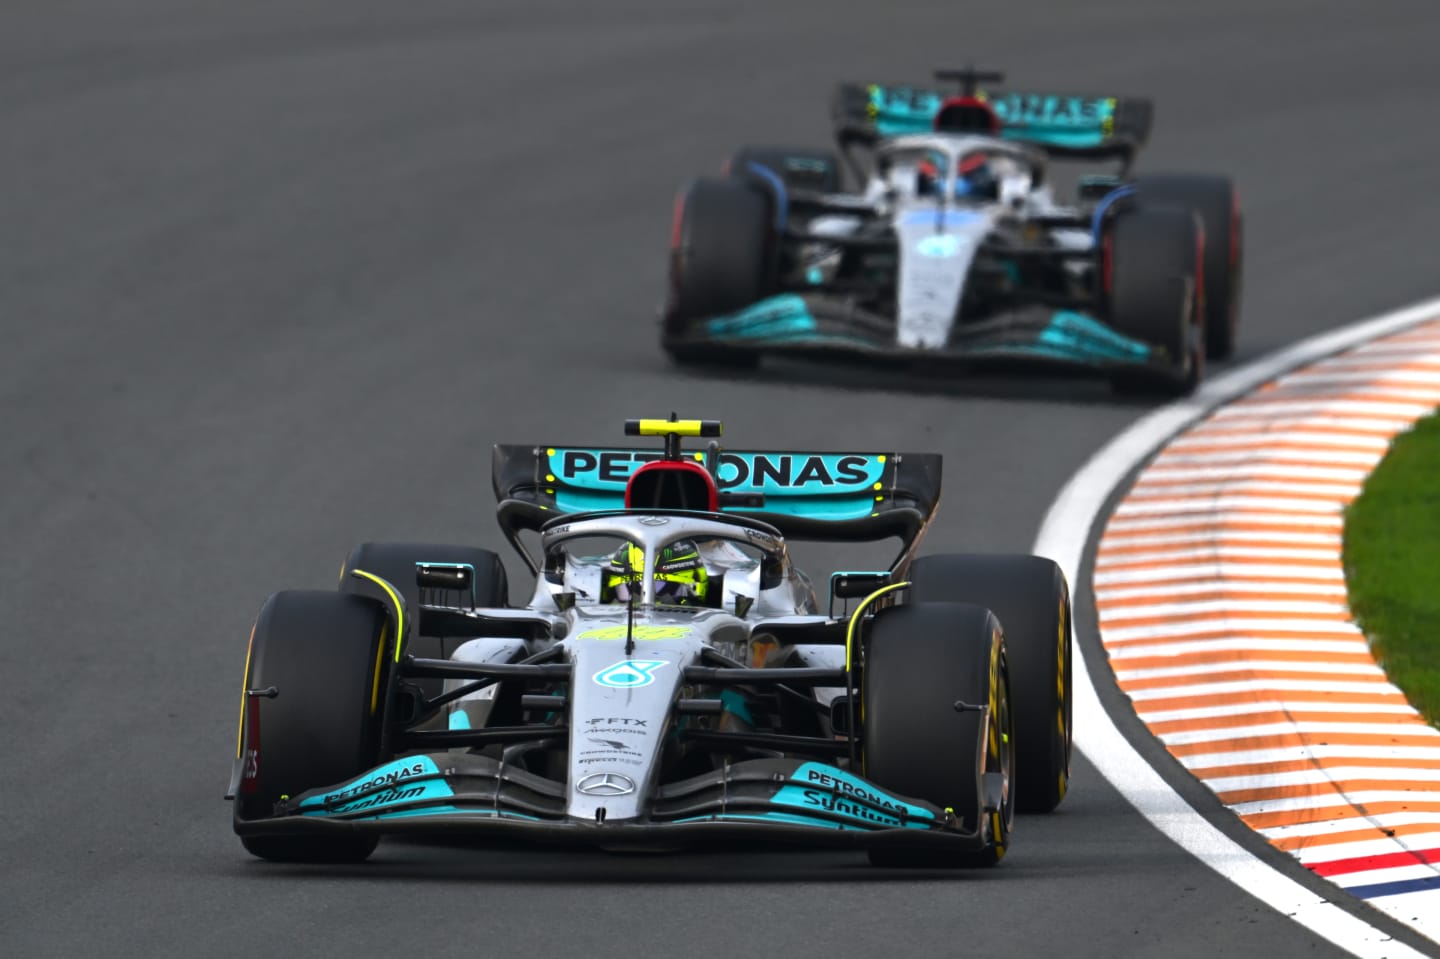 ZANDVOORT, NETHERLANDS - SEPTEMBER 04: Lewis Hamilton of Great Britain driving the (44) Mercedes